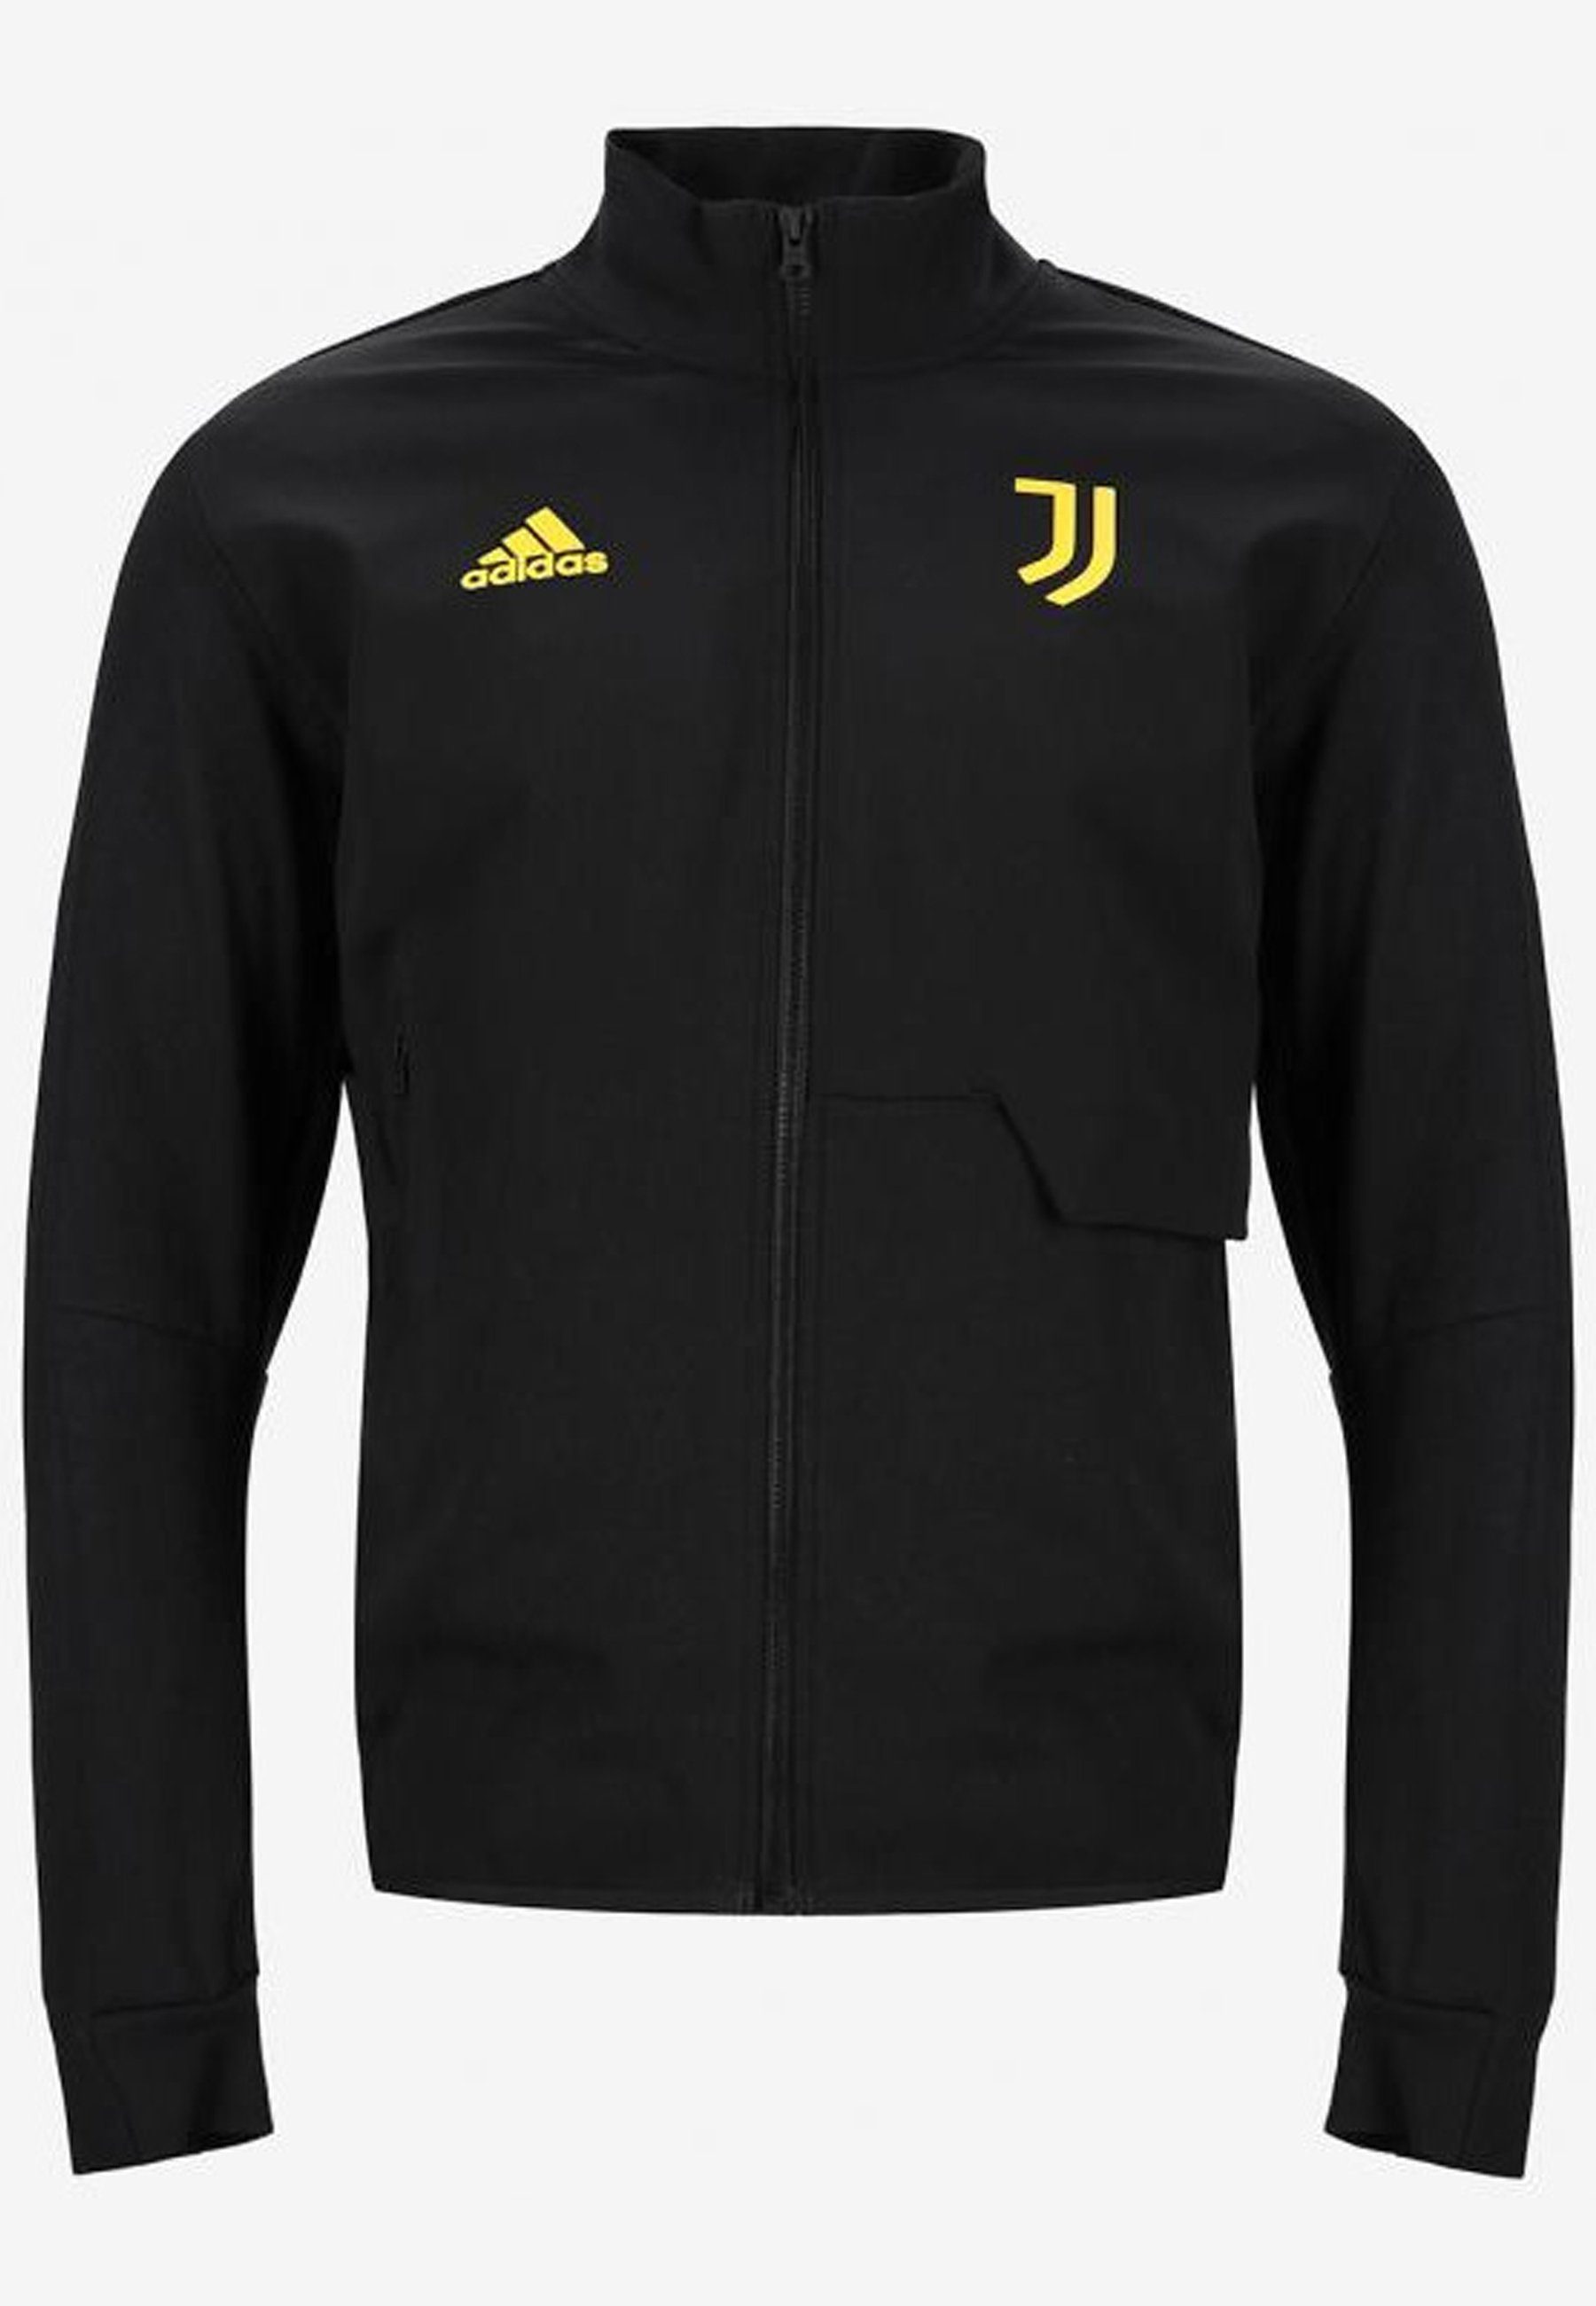 Originals schwarz Trainingsjacke Juve adidas